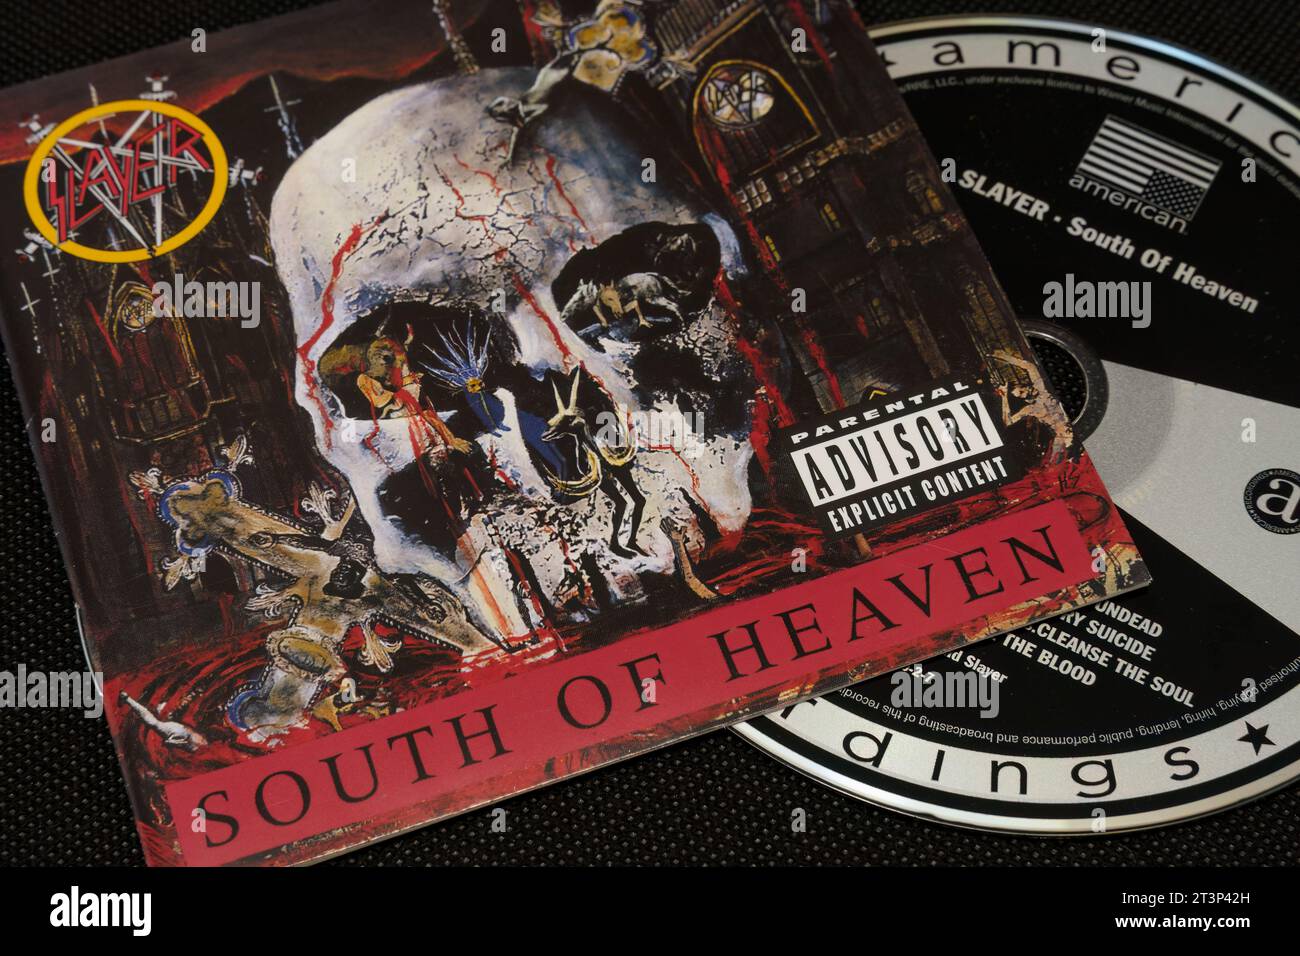 Slayer South of Heaven 12'' Vinyl Lp - Vintage Record Cover Stock Photo -  Alamy